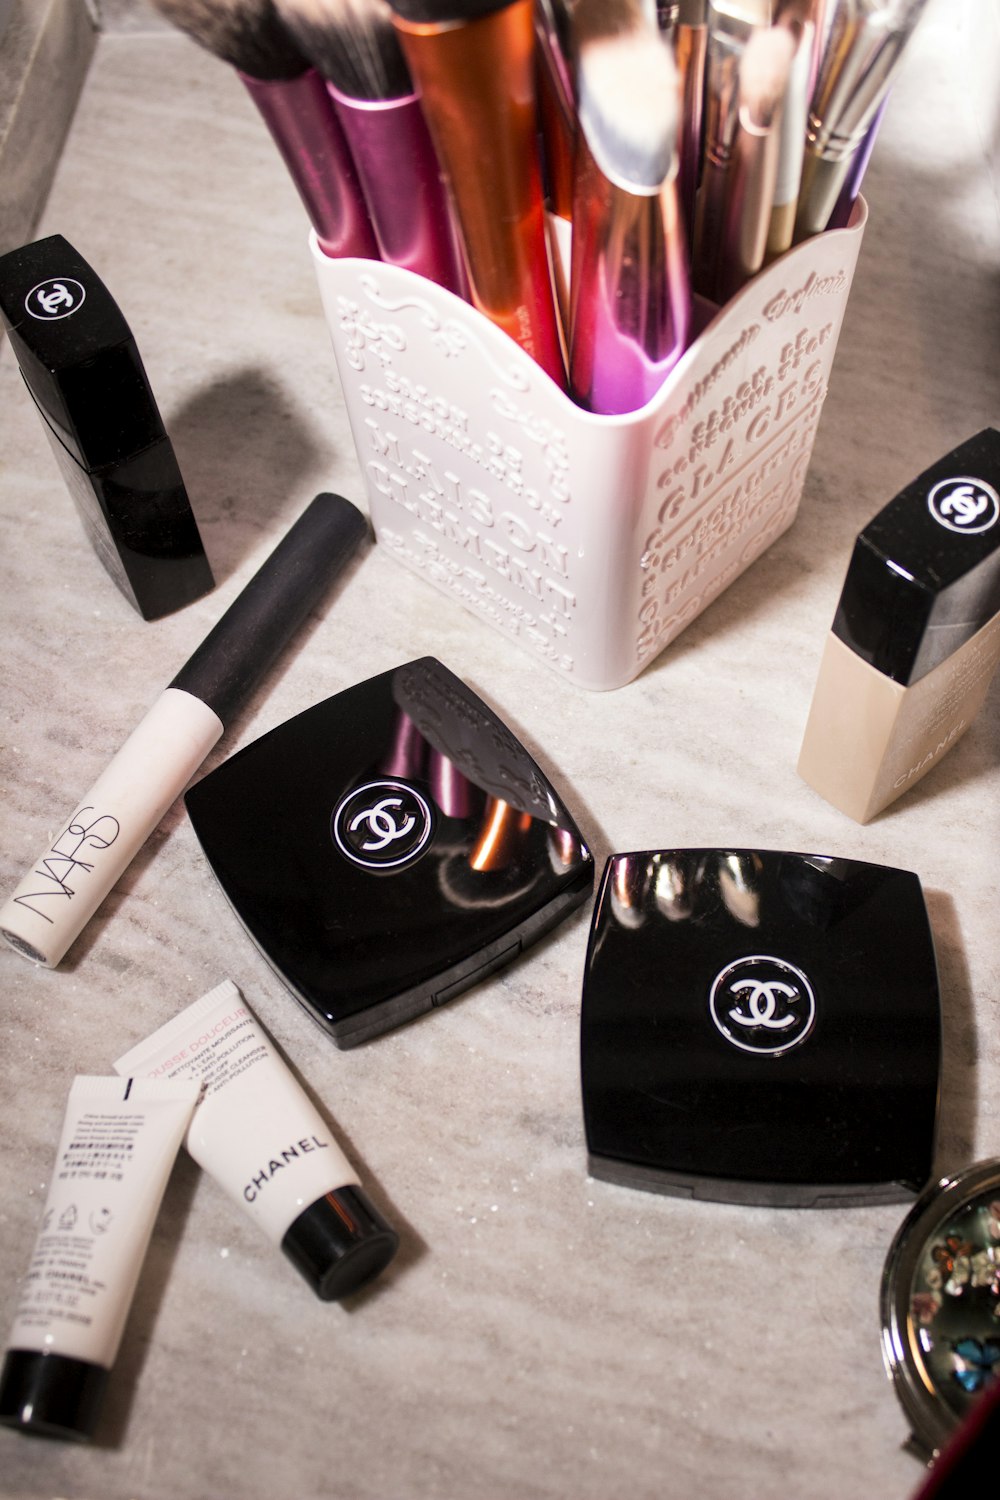 Chanel makeup set photo – Free Skincare Image on Unsplash